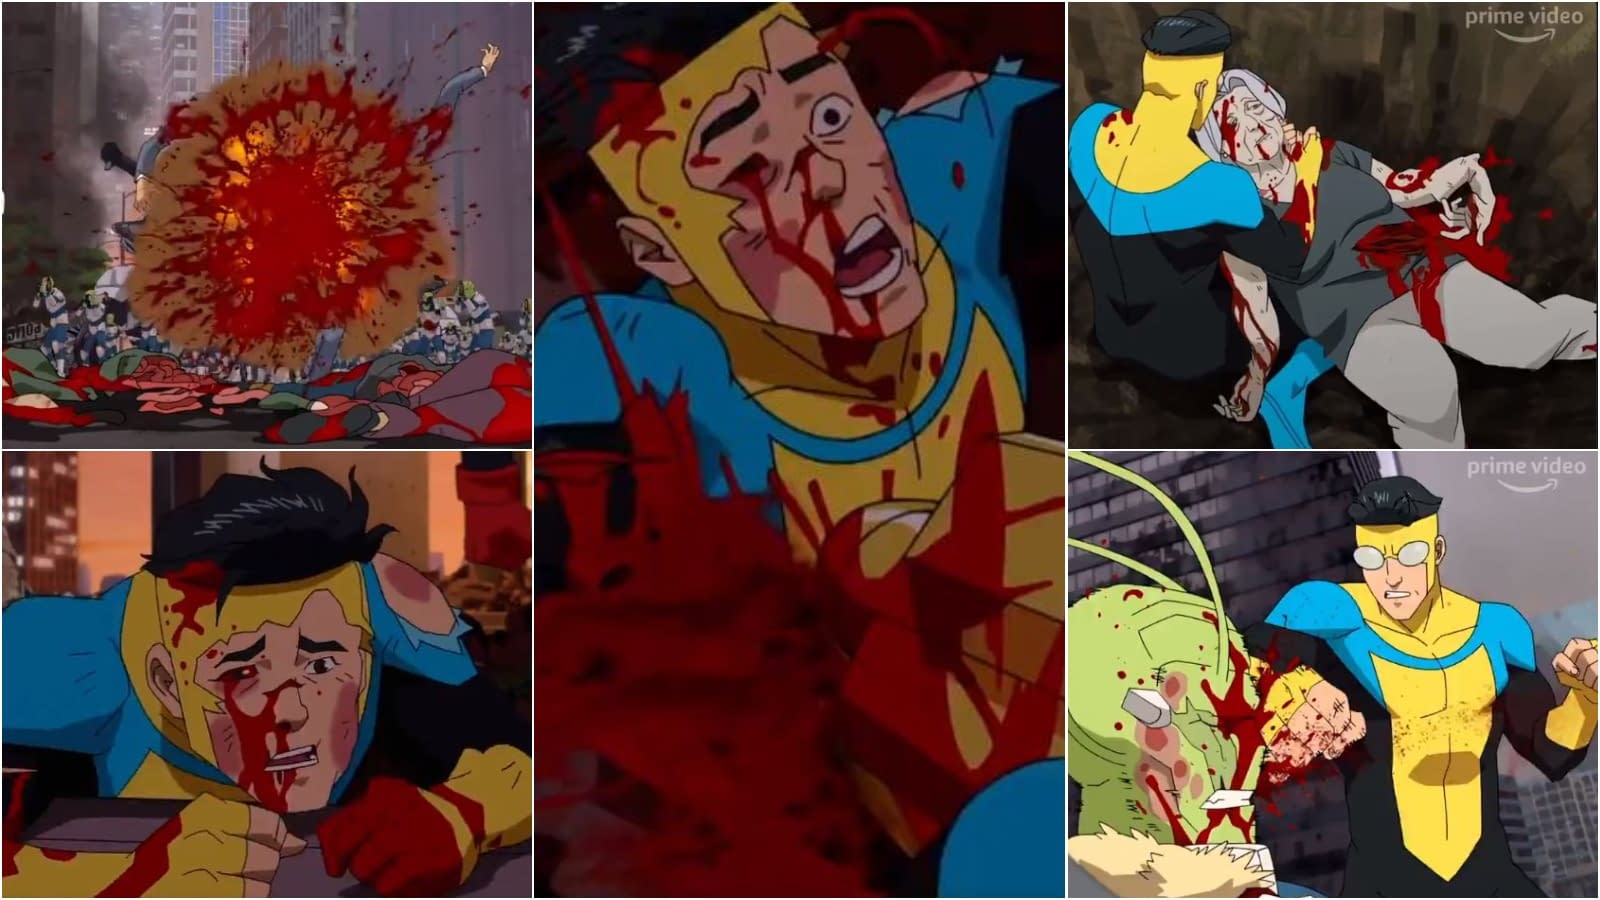 Invincible Season 2 Trailer: The Bloody Superhero Series Is Back